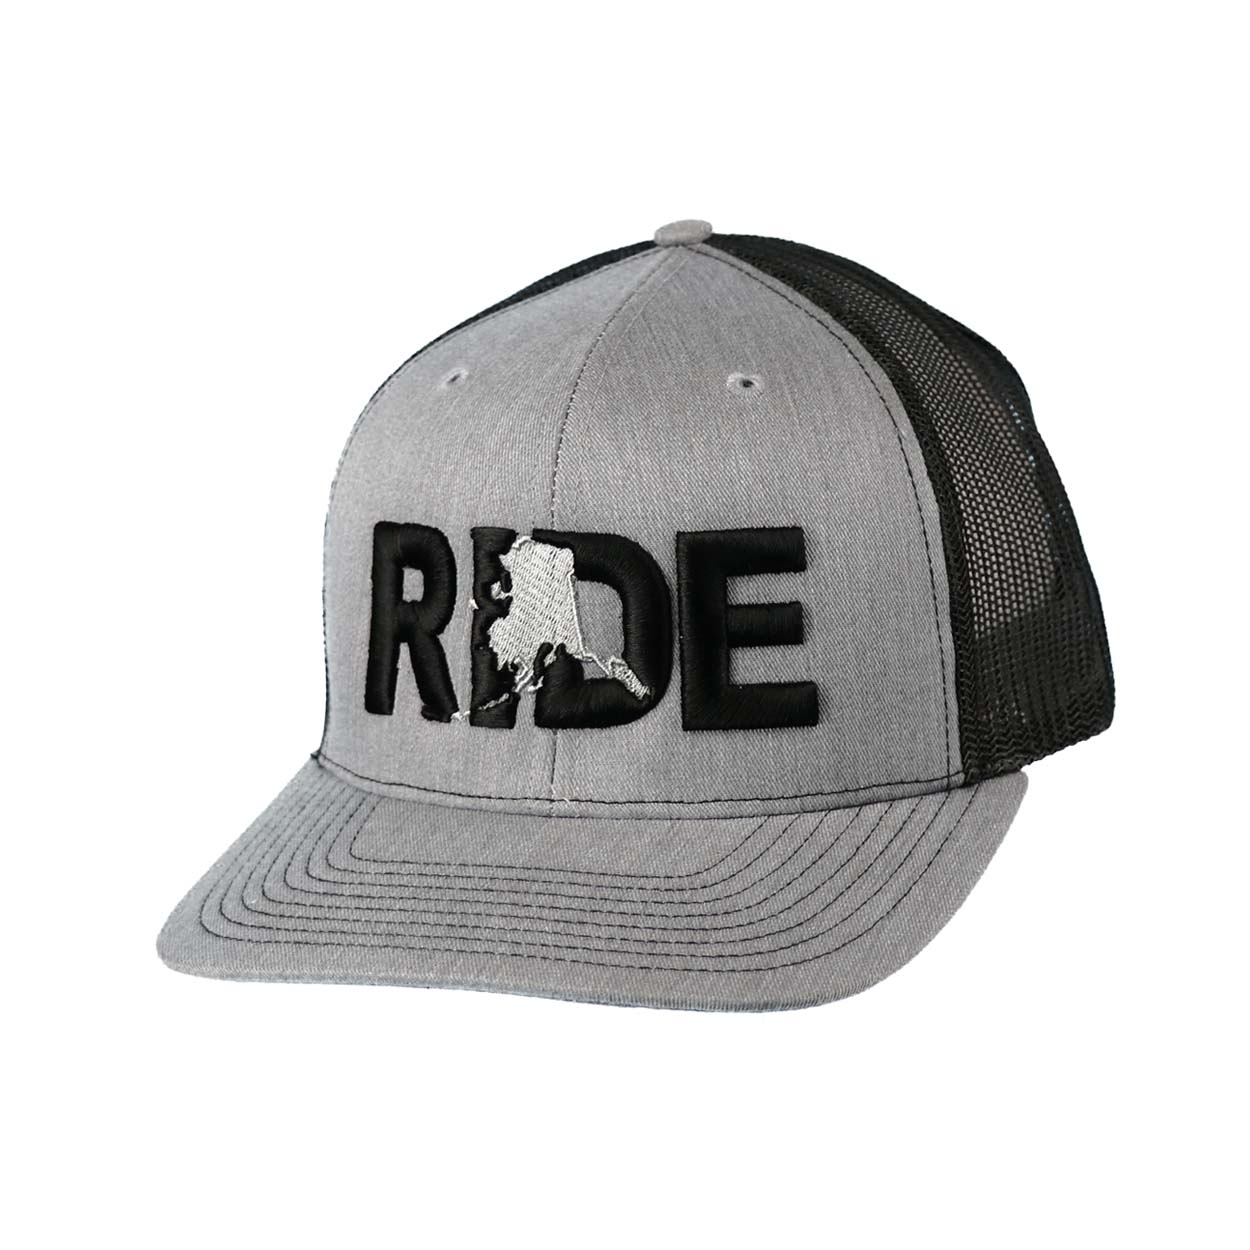 Ride Alaska Classic Pro 3D Puff Embroidered Snapback Trucker Hat Heather Gray/Black